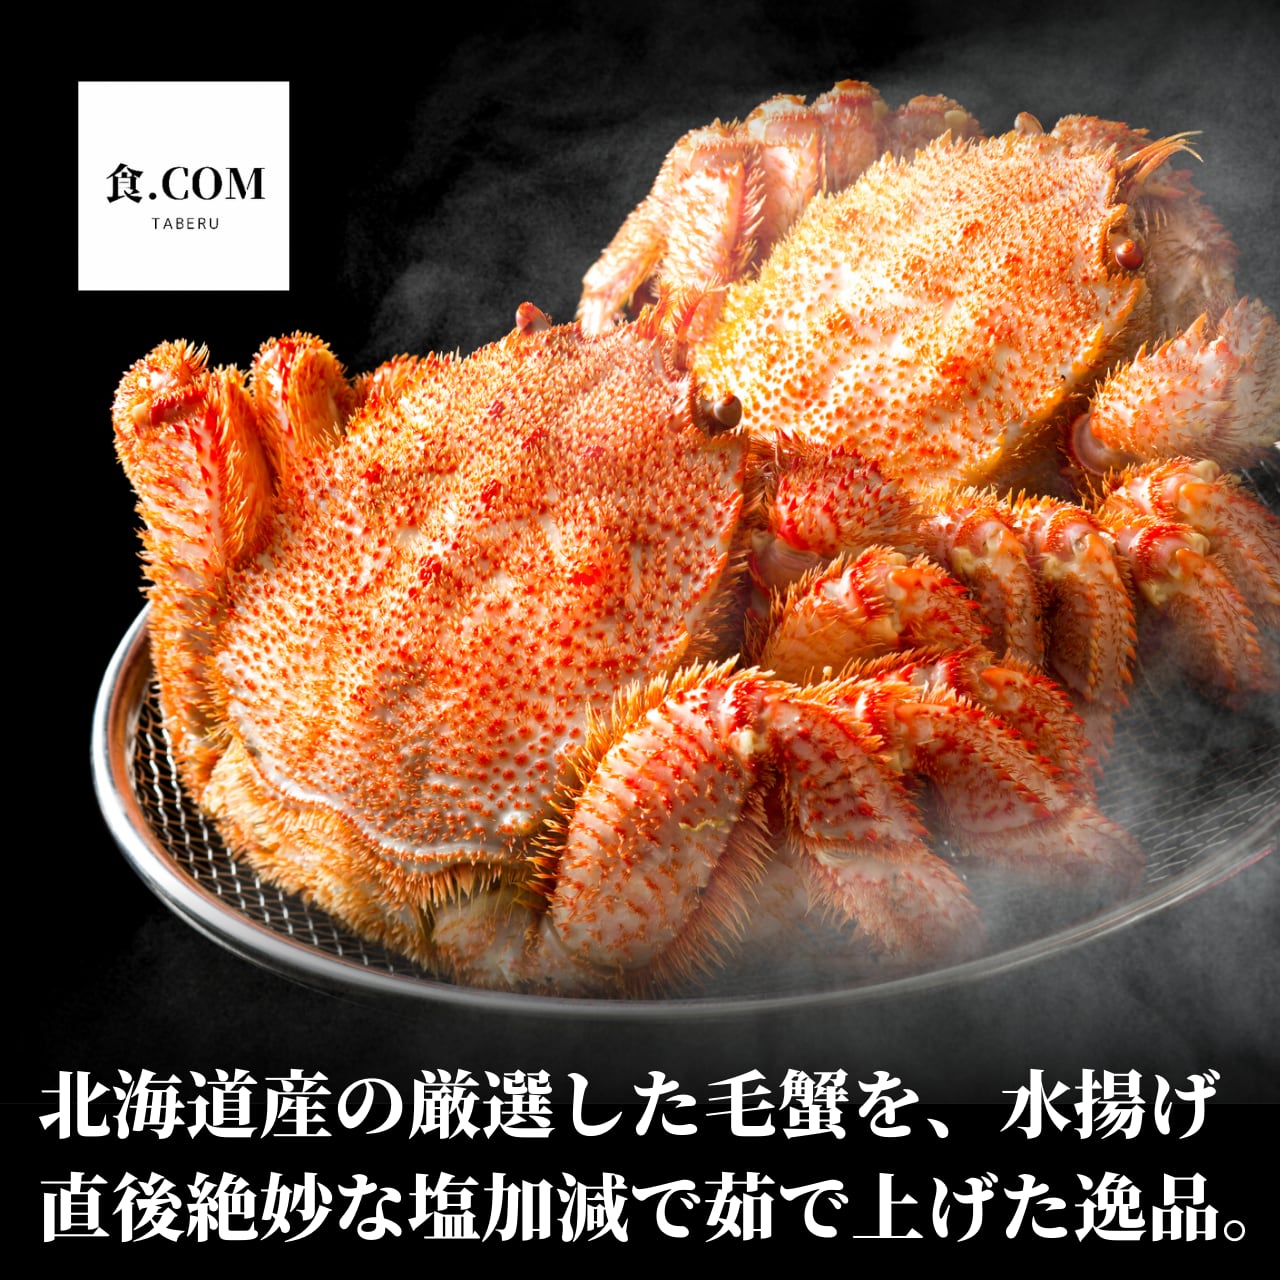 特大！北海道産毛蟹1尾800g×2尾〈ボイル冷凍〉